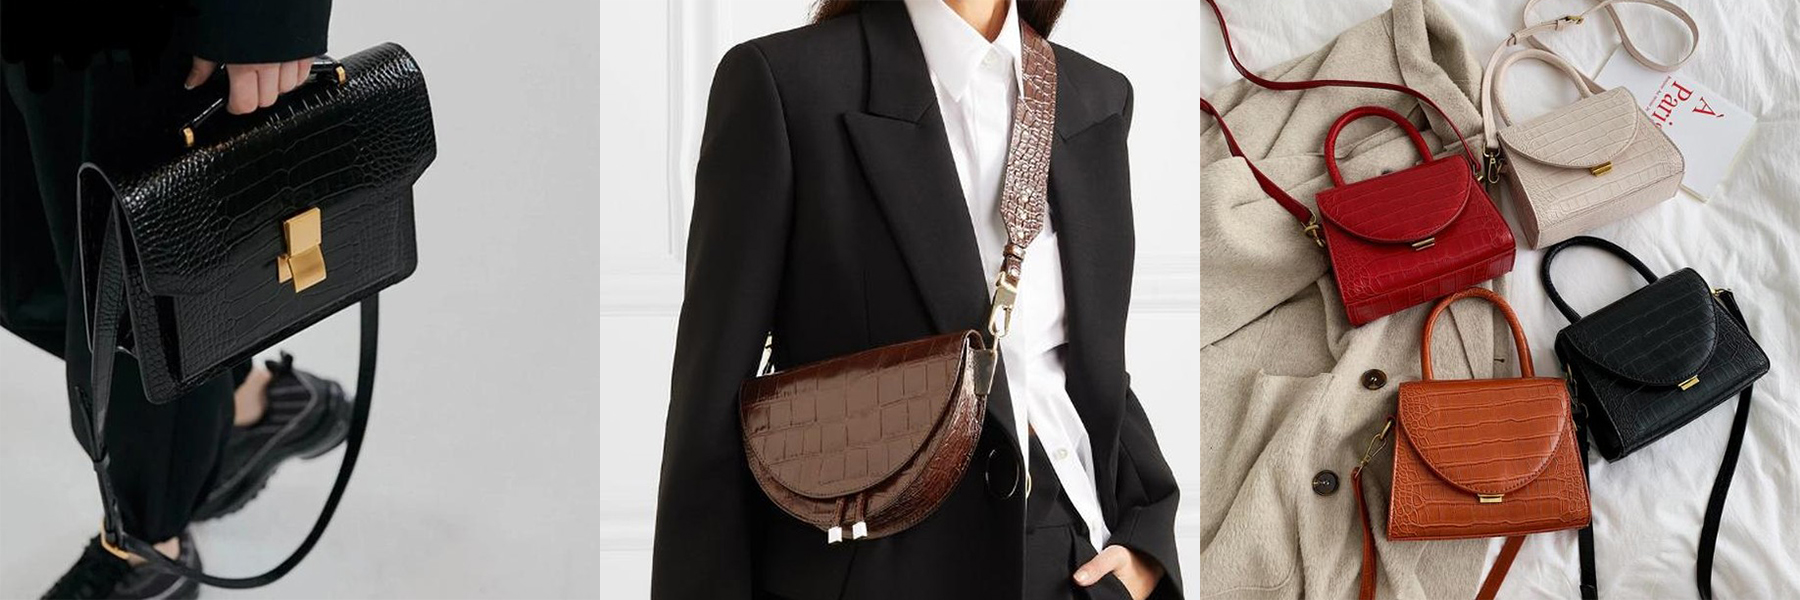 Vegan Handbags On A Budget (Stylish, No Fast Fashion, Under $100) - The ...